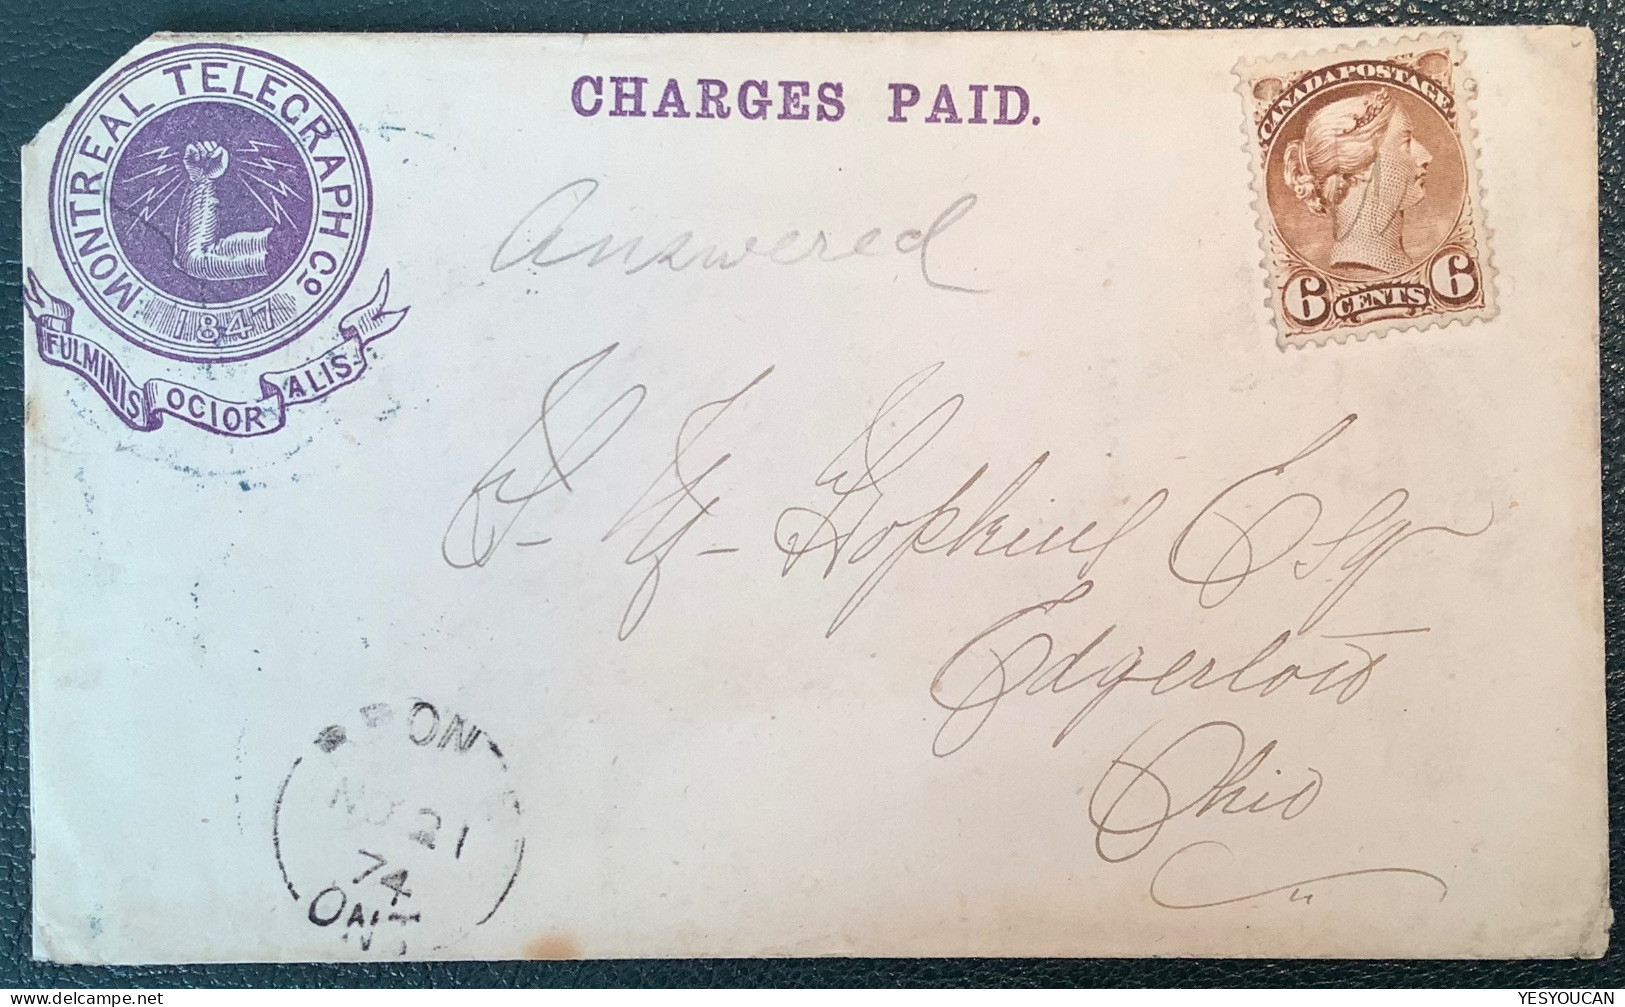 Canada RARE MONTREAL TELEGRAPH Co Envelope Cds 1874/MONT 6c Queen Victoria>Cleveland Ohio US (cover Telegram Telegramme - Cartas & Documentos